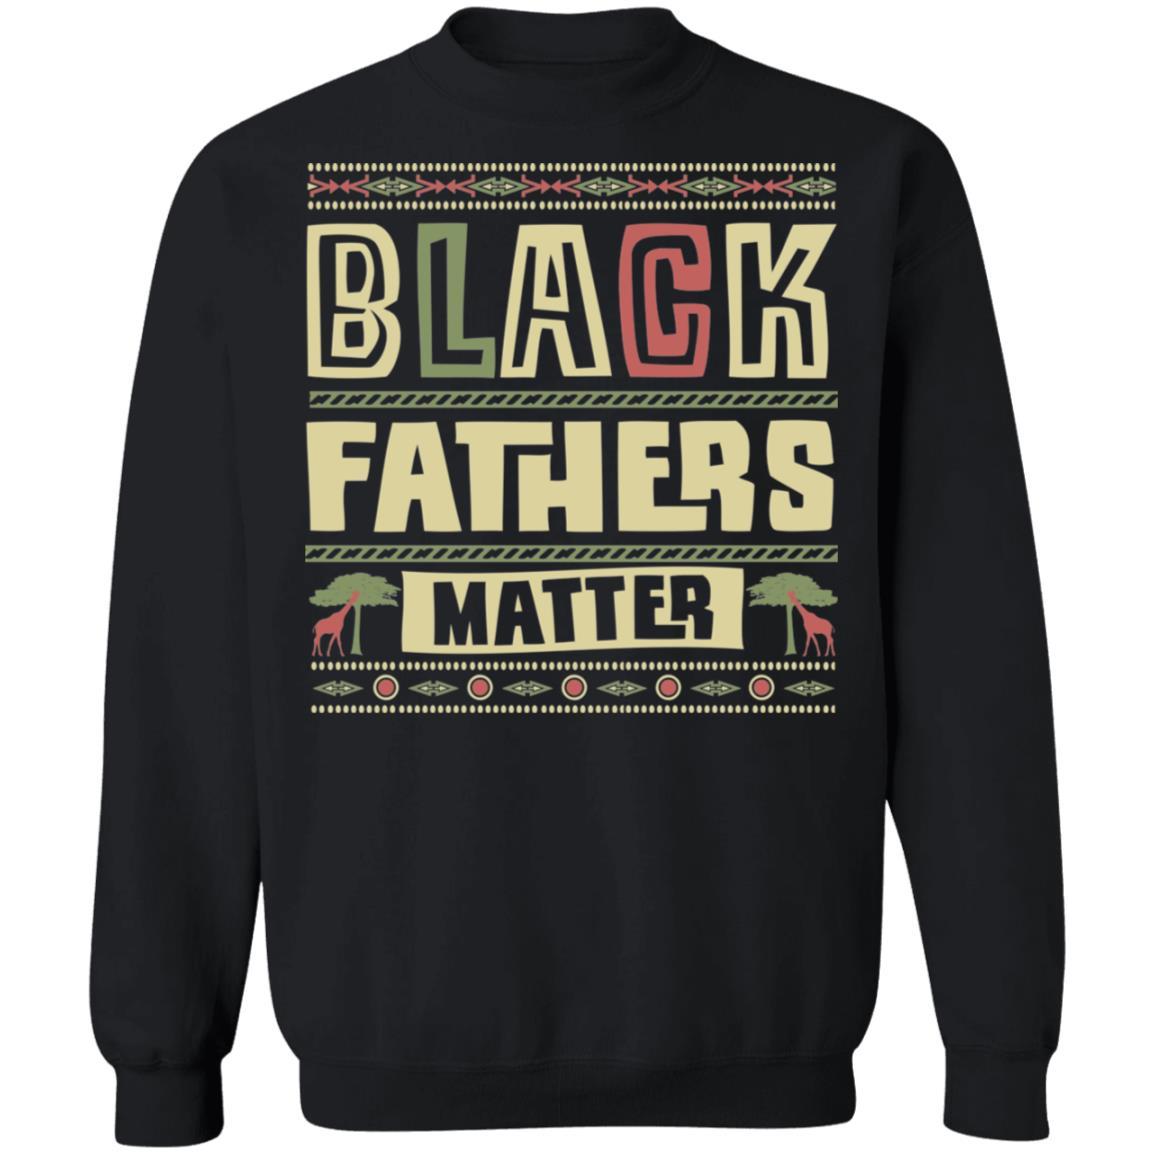 Black Fathers Matter Apparel CustomCat Crewneck Sweatshirt Black S